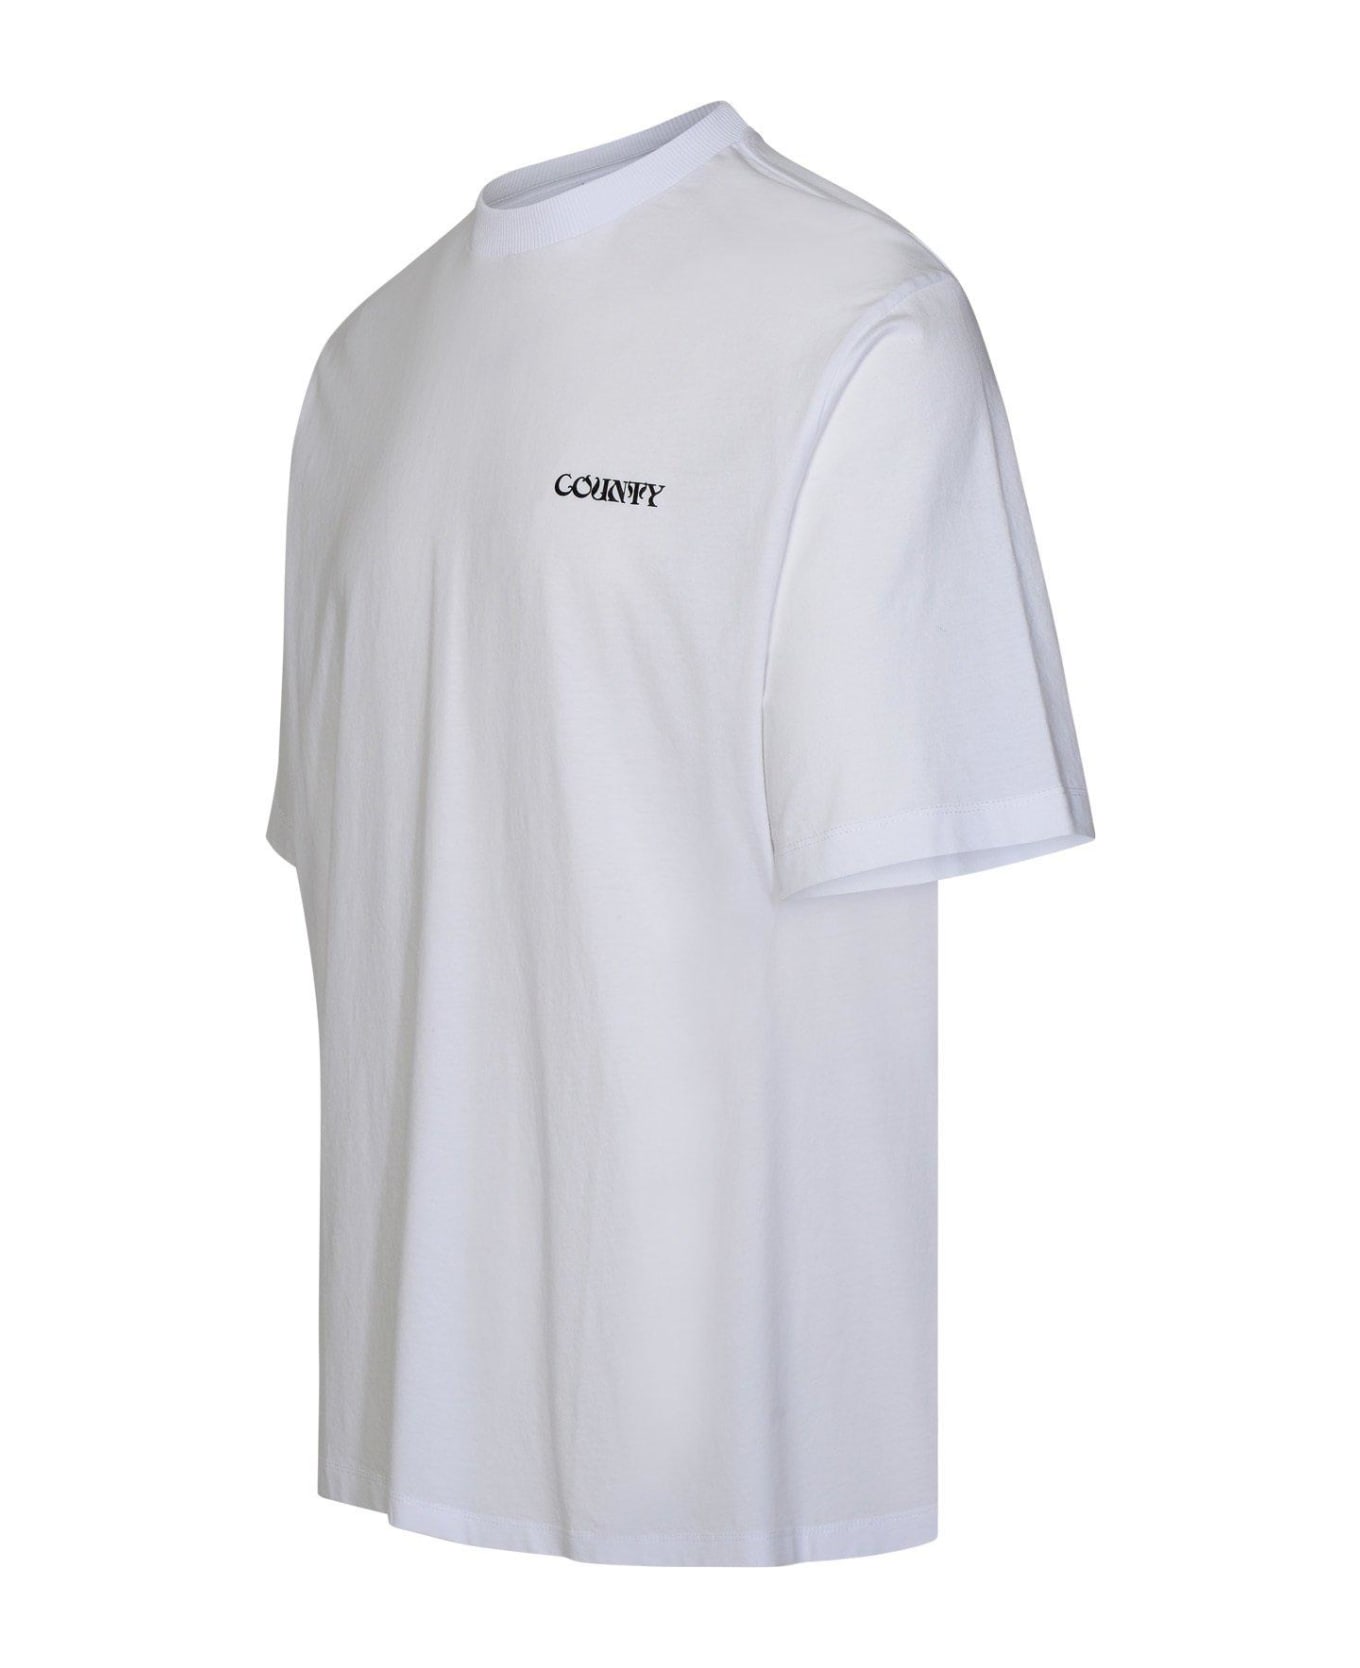 Marcelo Burlon County Printed Crewneck T-shirt - Bianco シャツ